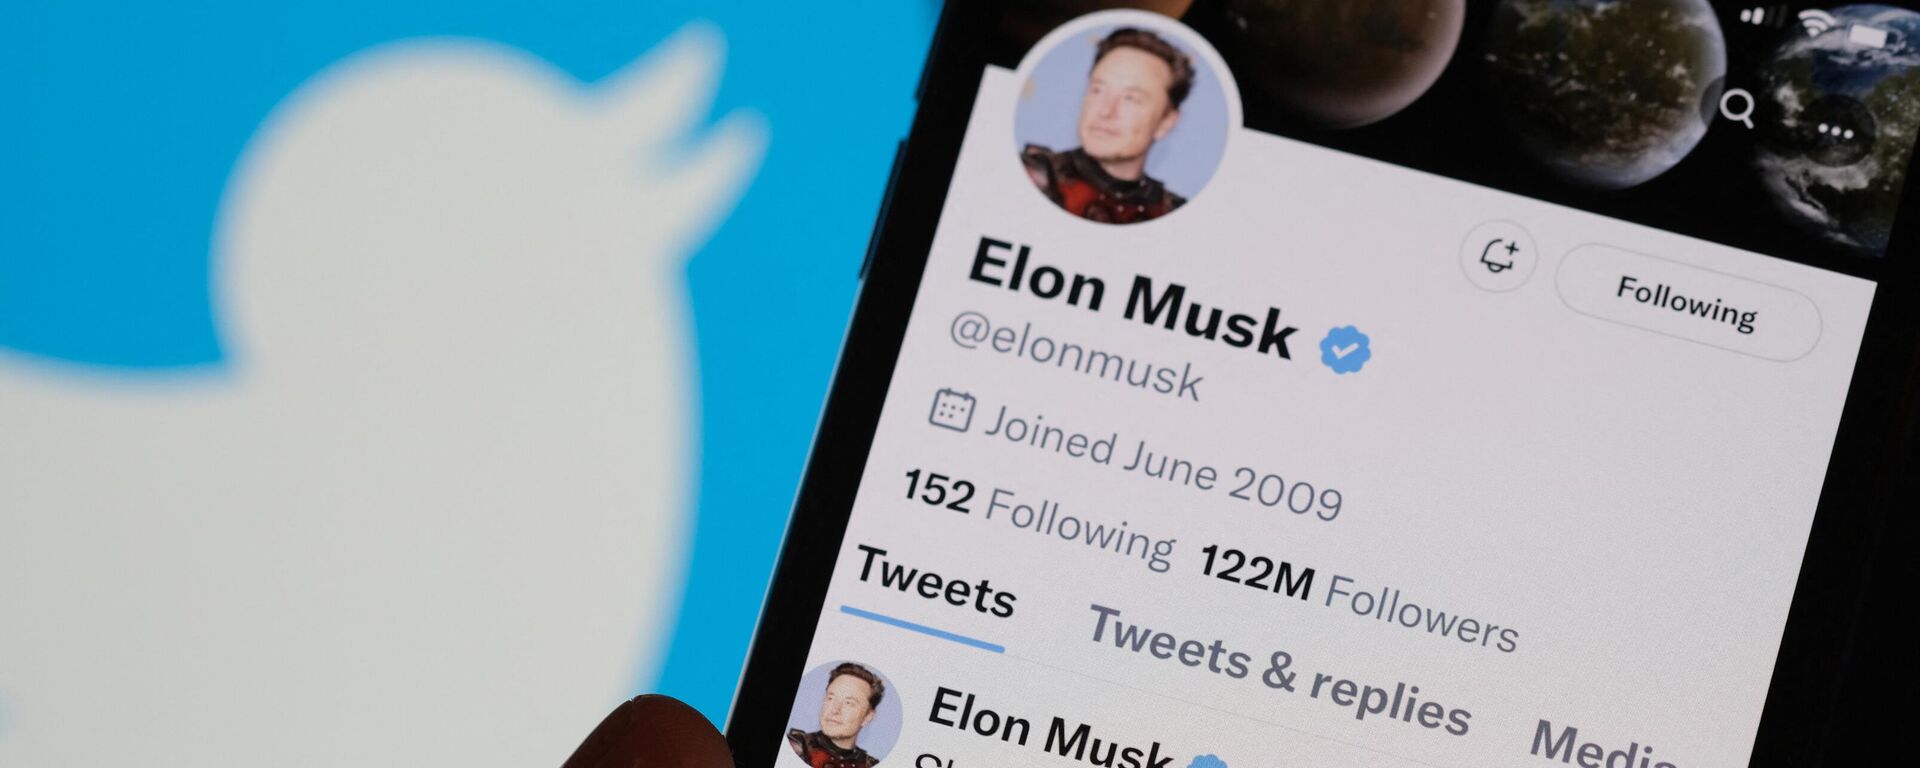 La cuenta de Twitter de Elon Musk - Sputnik Mundo, 1920, 26.12.2022